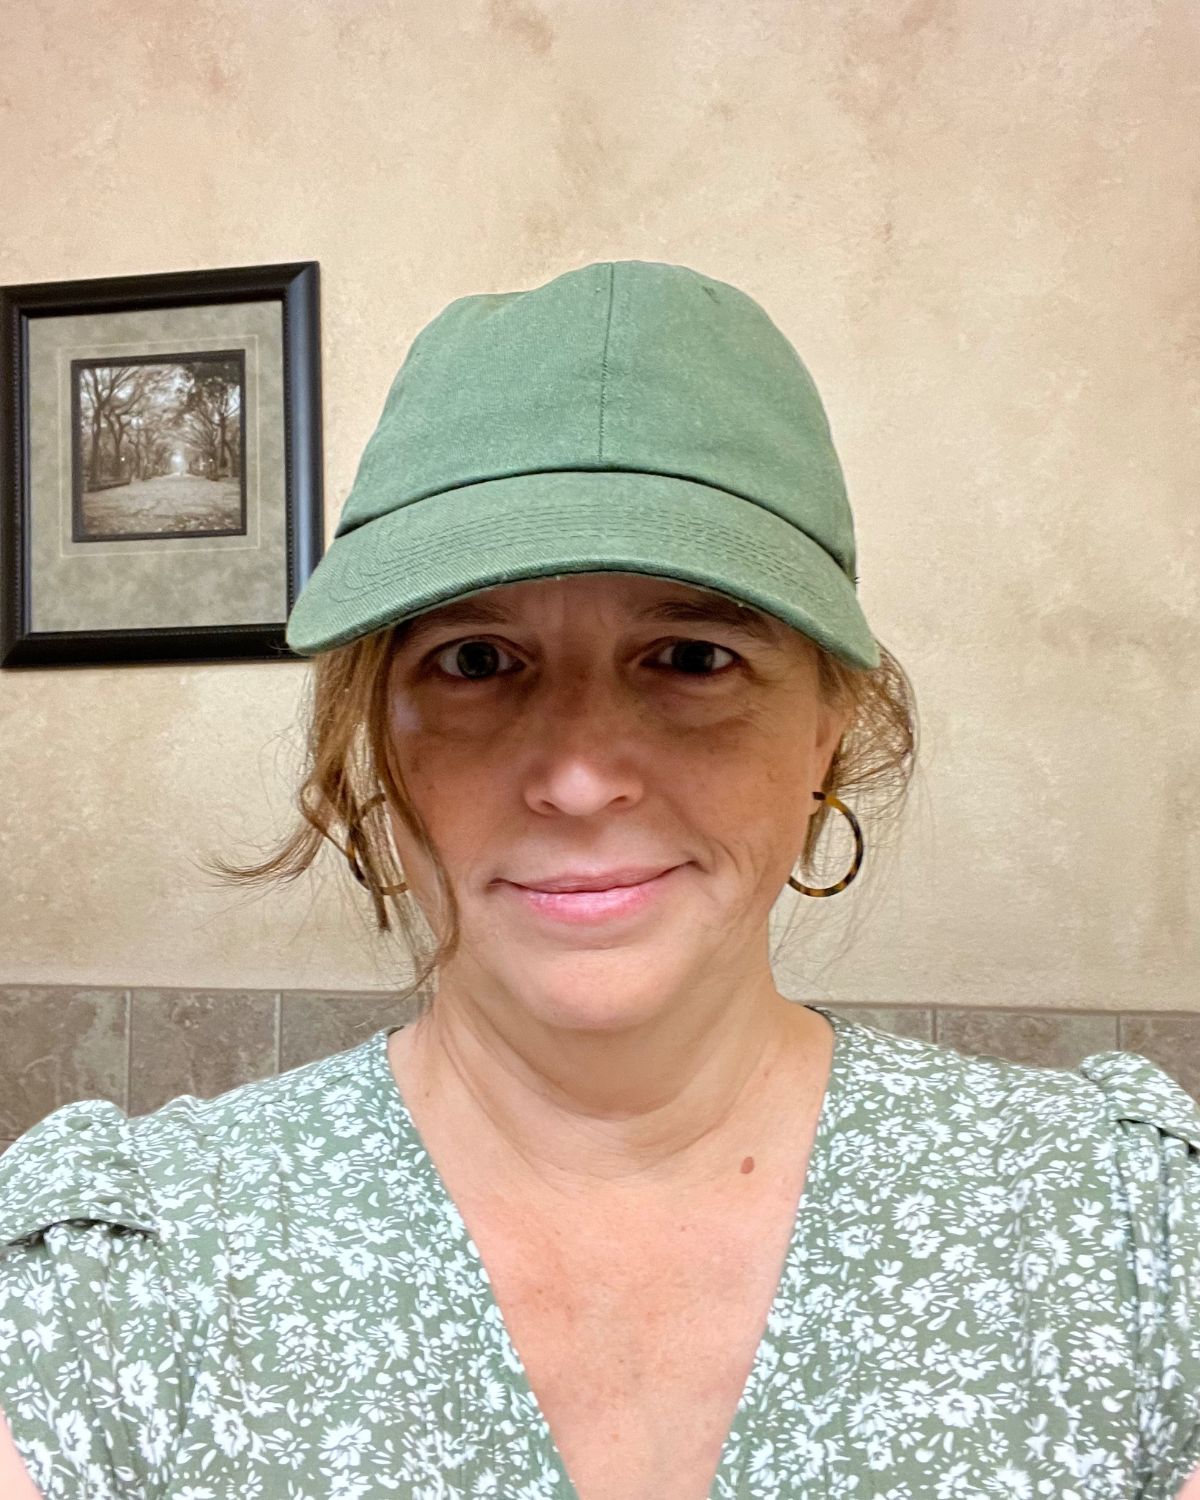 jessica wearing a green baseball cap.